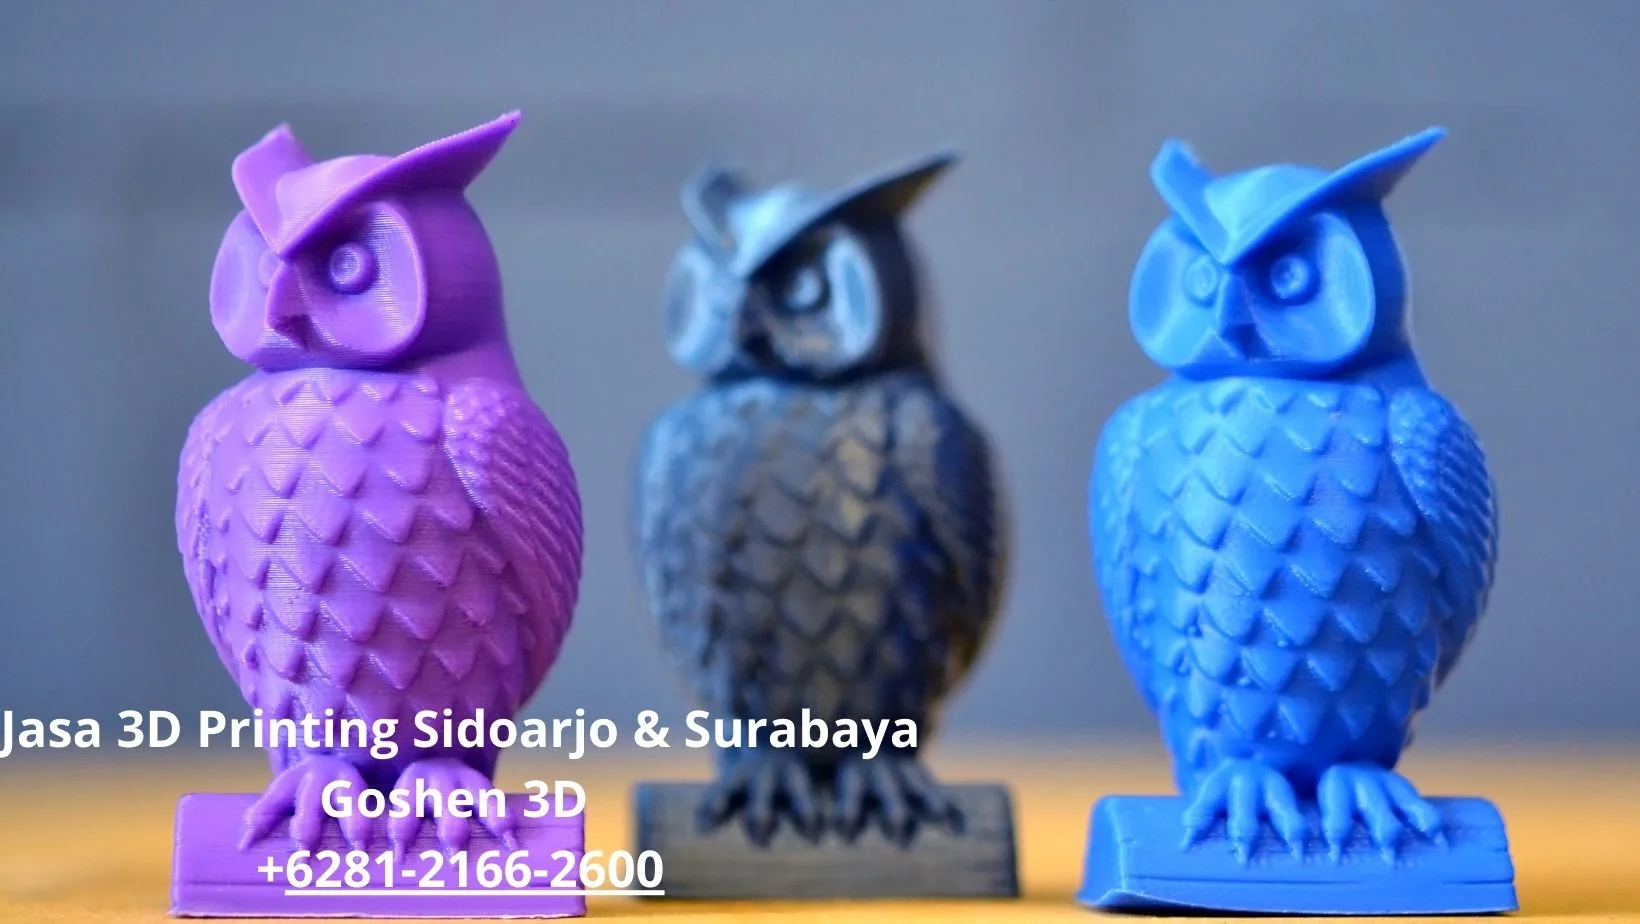 Jasa 3D Printing Sidoarjo & Surabaya Goshen 3D